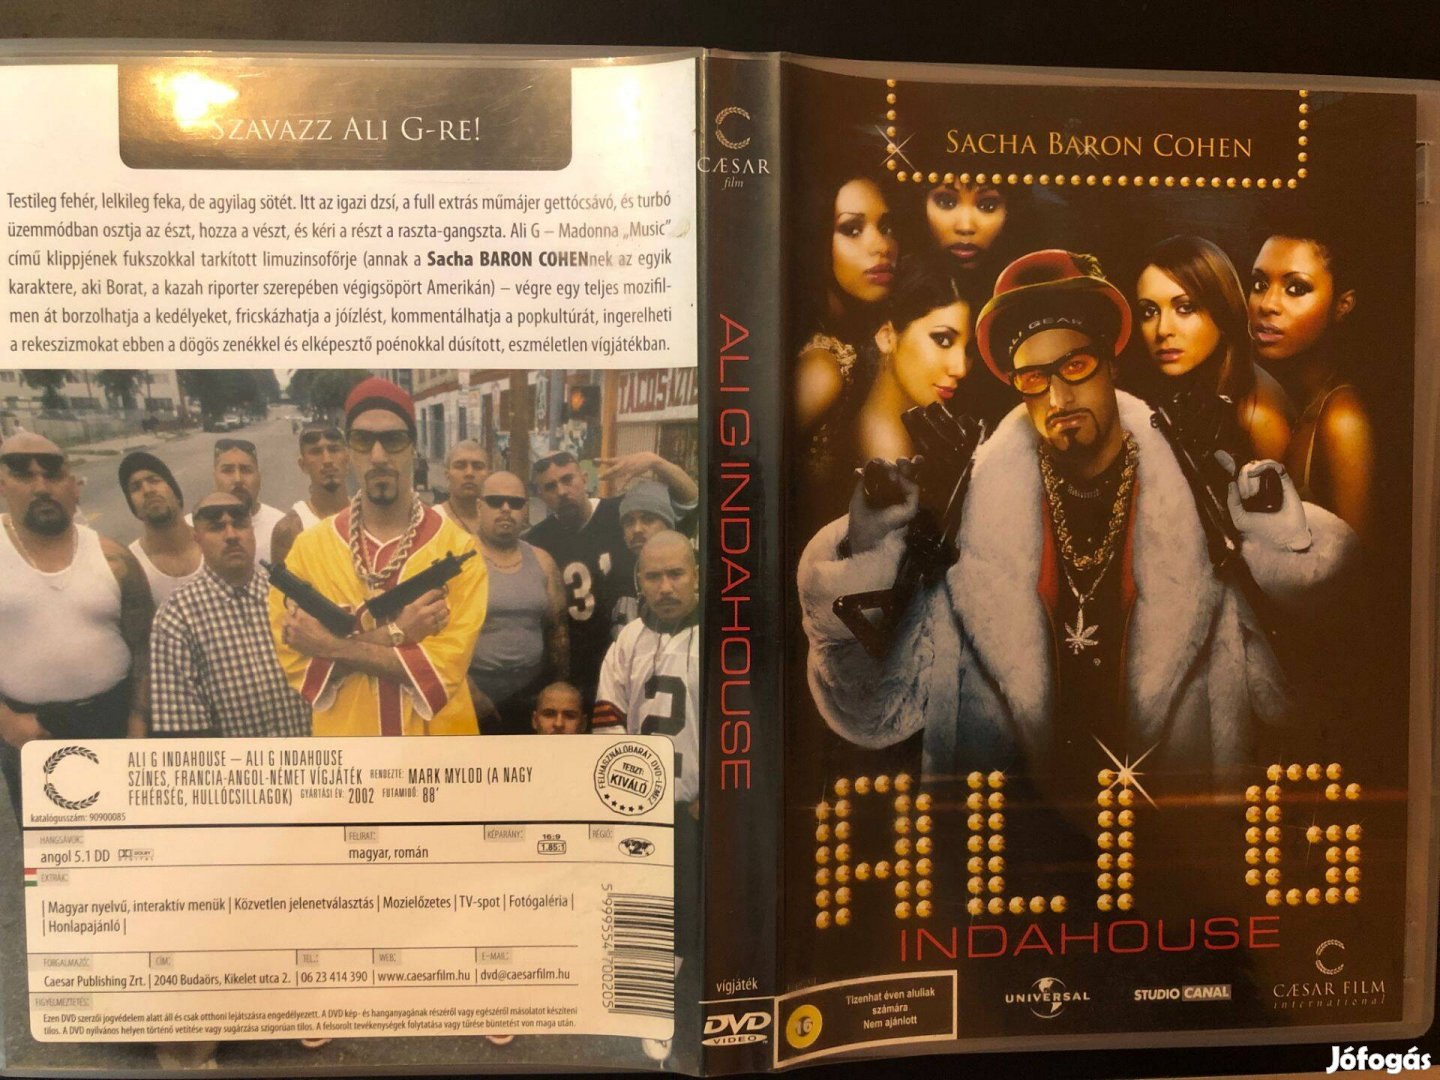 Ali G Indahouse The Movie DVD Sacha Baron Cohen - Like New